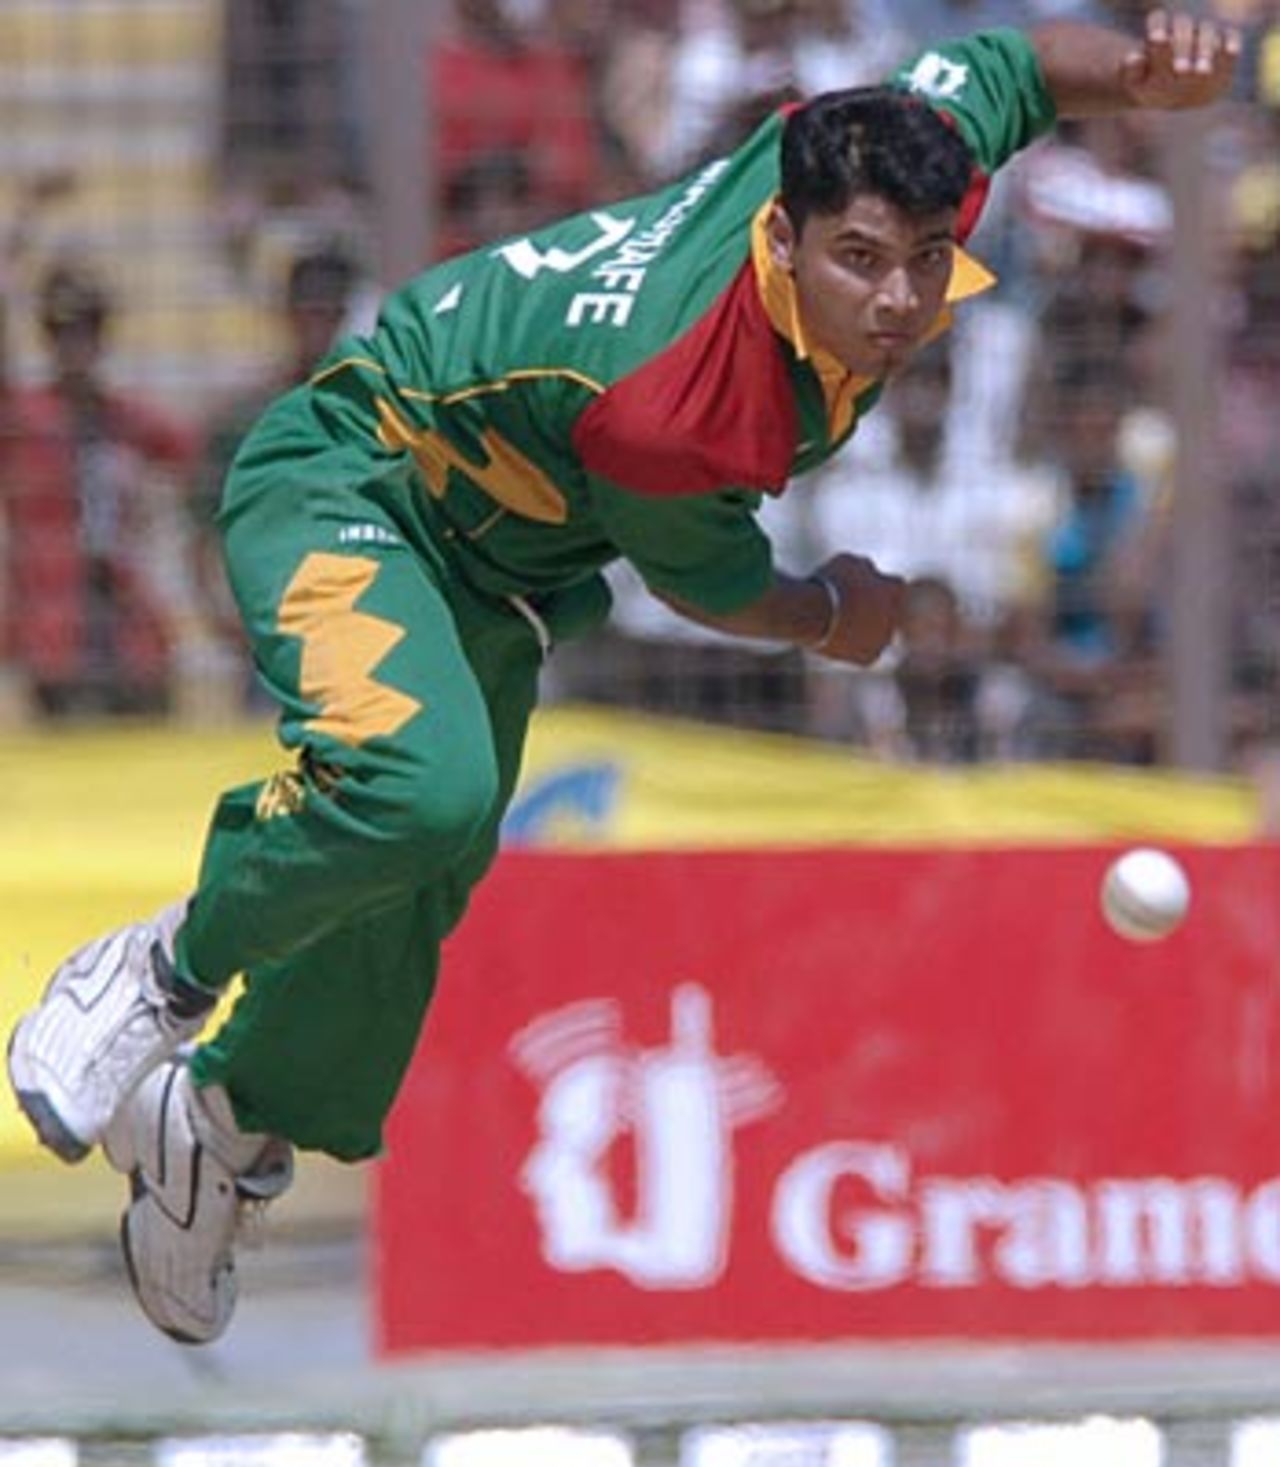 Mashrafe Mortaza lets fly against Sri Lanka, but went for 71 runs in his 10 overs, Bangladesh v Sri Lanka, 3rd ODI, Chittagong, February 25, 2006